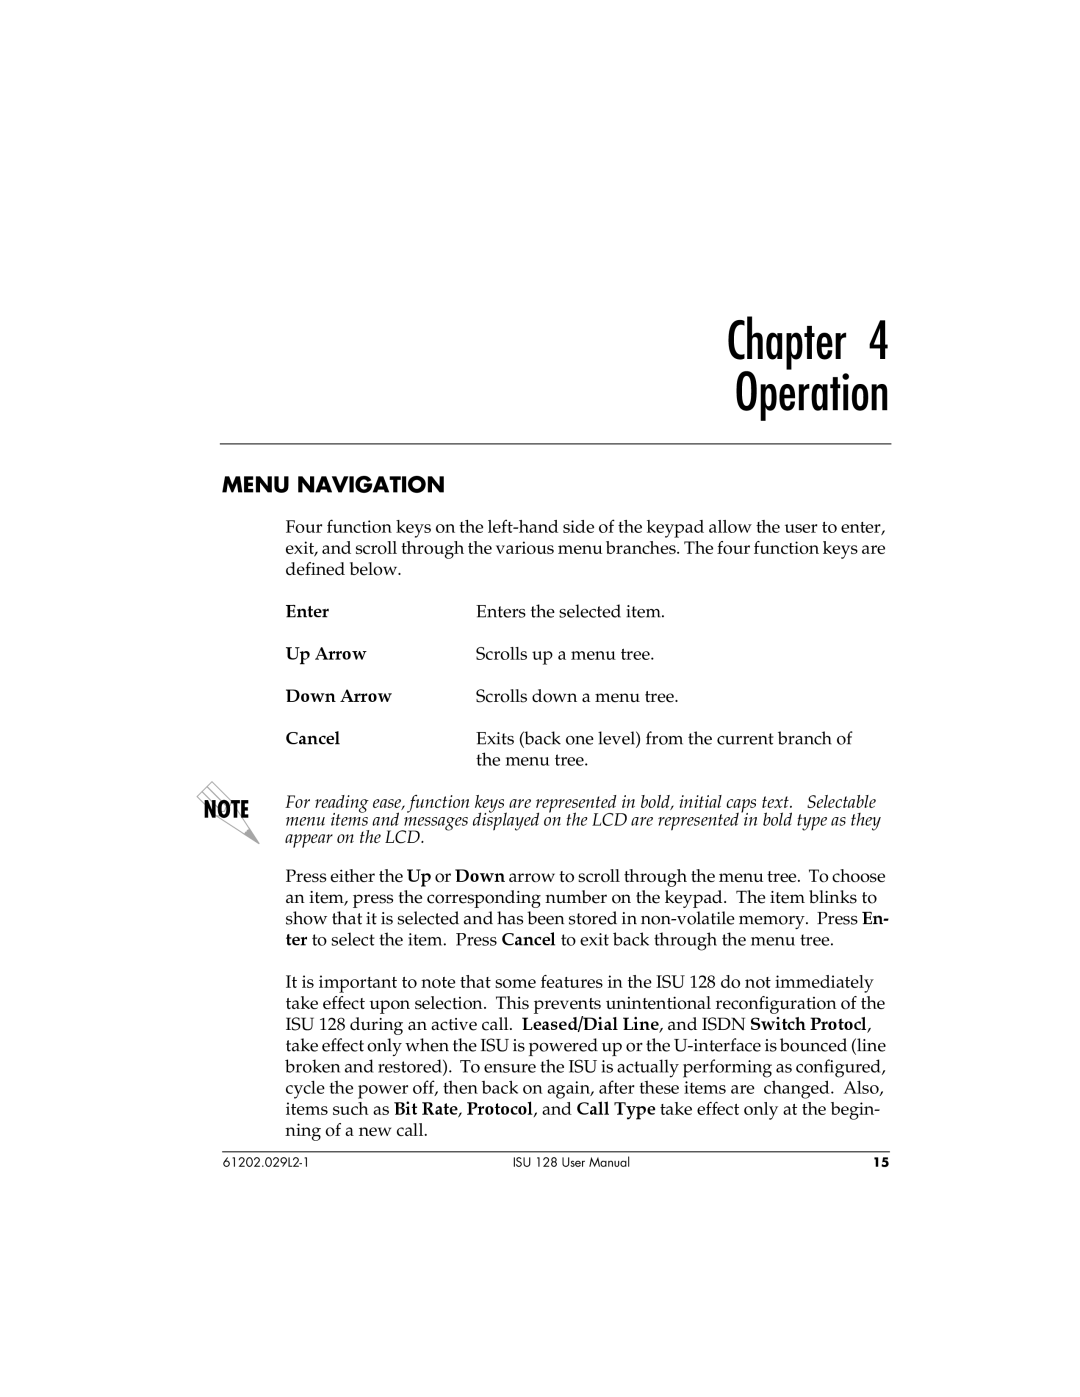 ADTRAN ISU 128 user manual Chapter Operation, Menu Navigation 